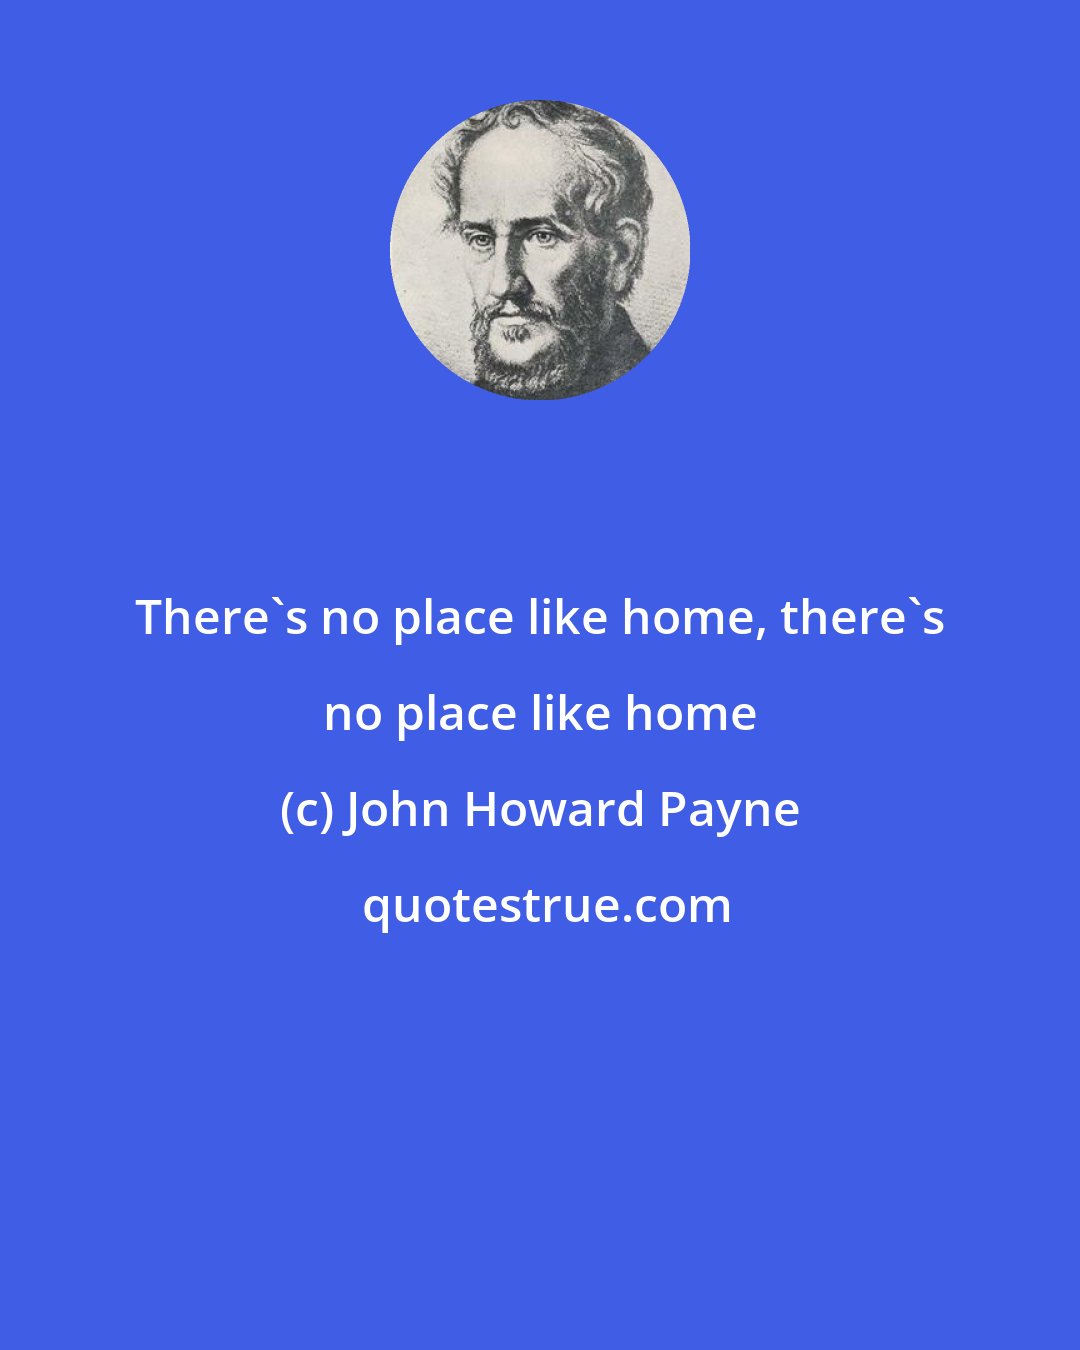 John Howard Payne: There's no place like home, there's no place like home